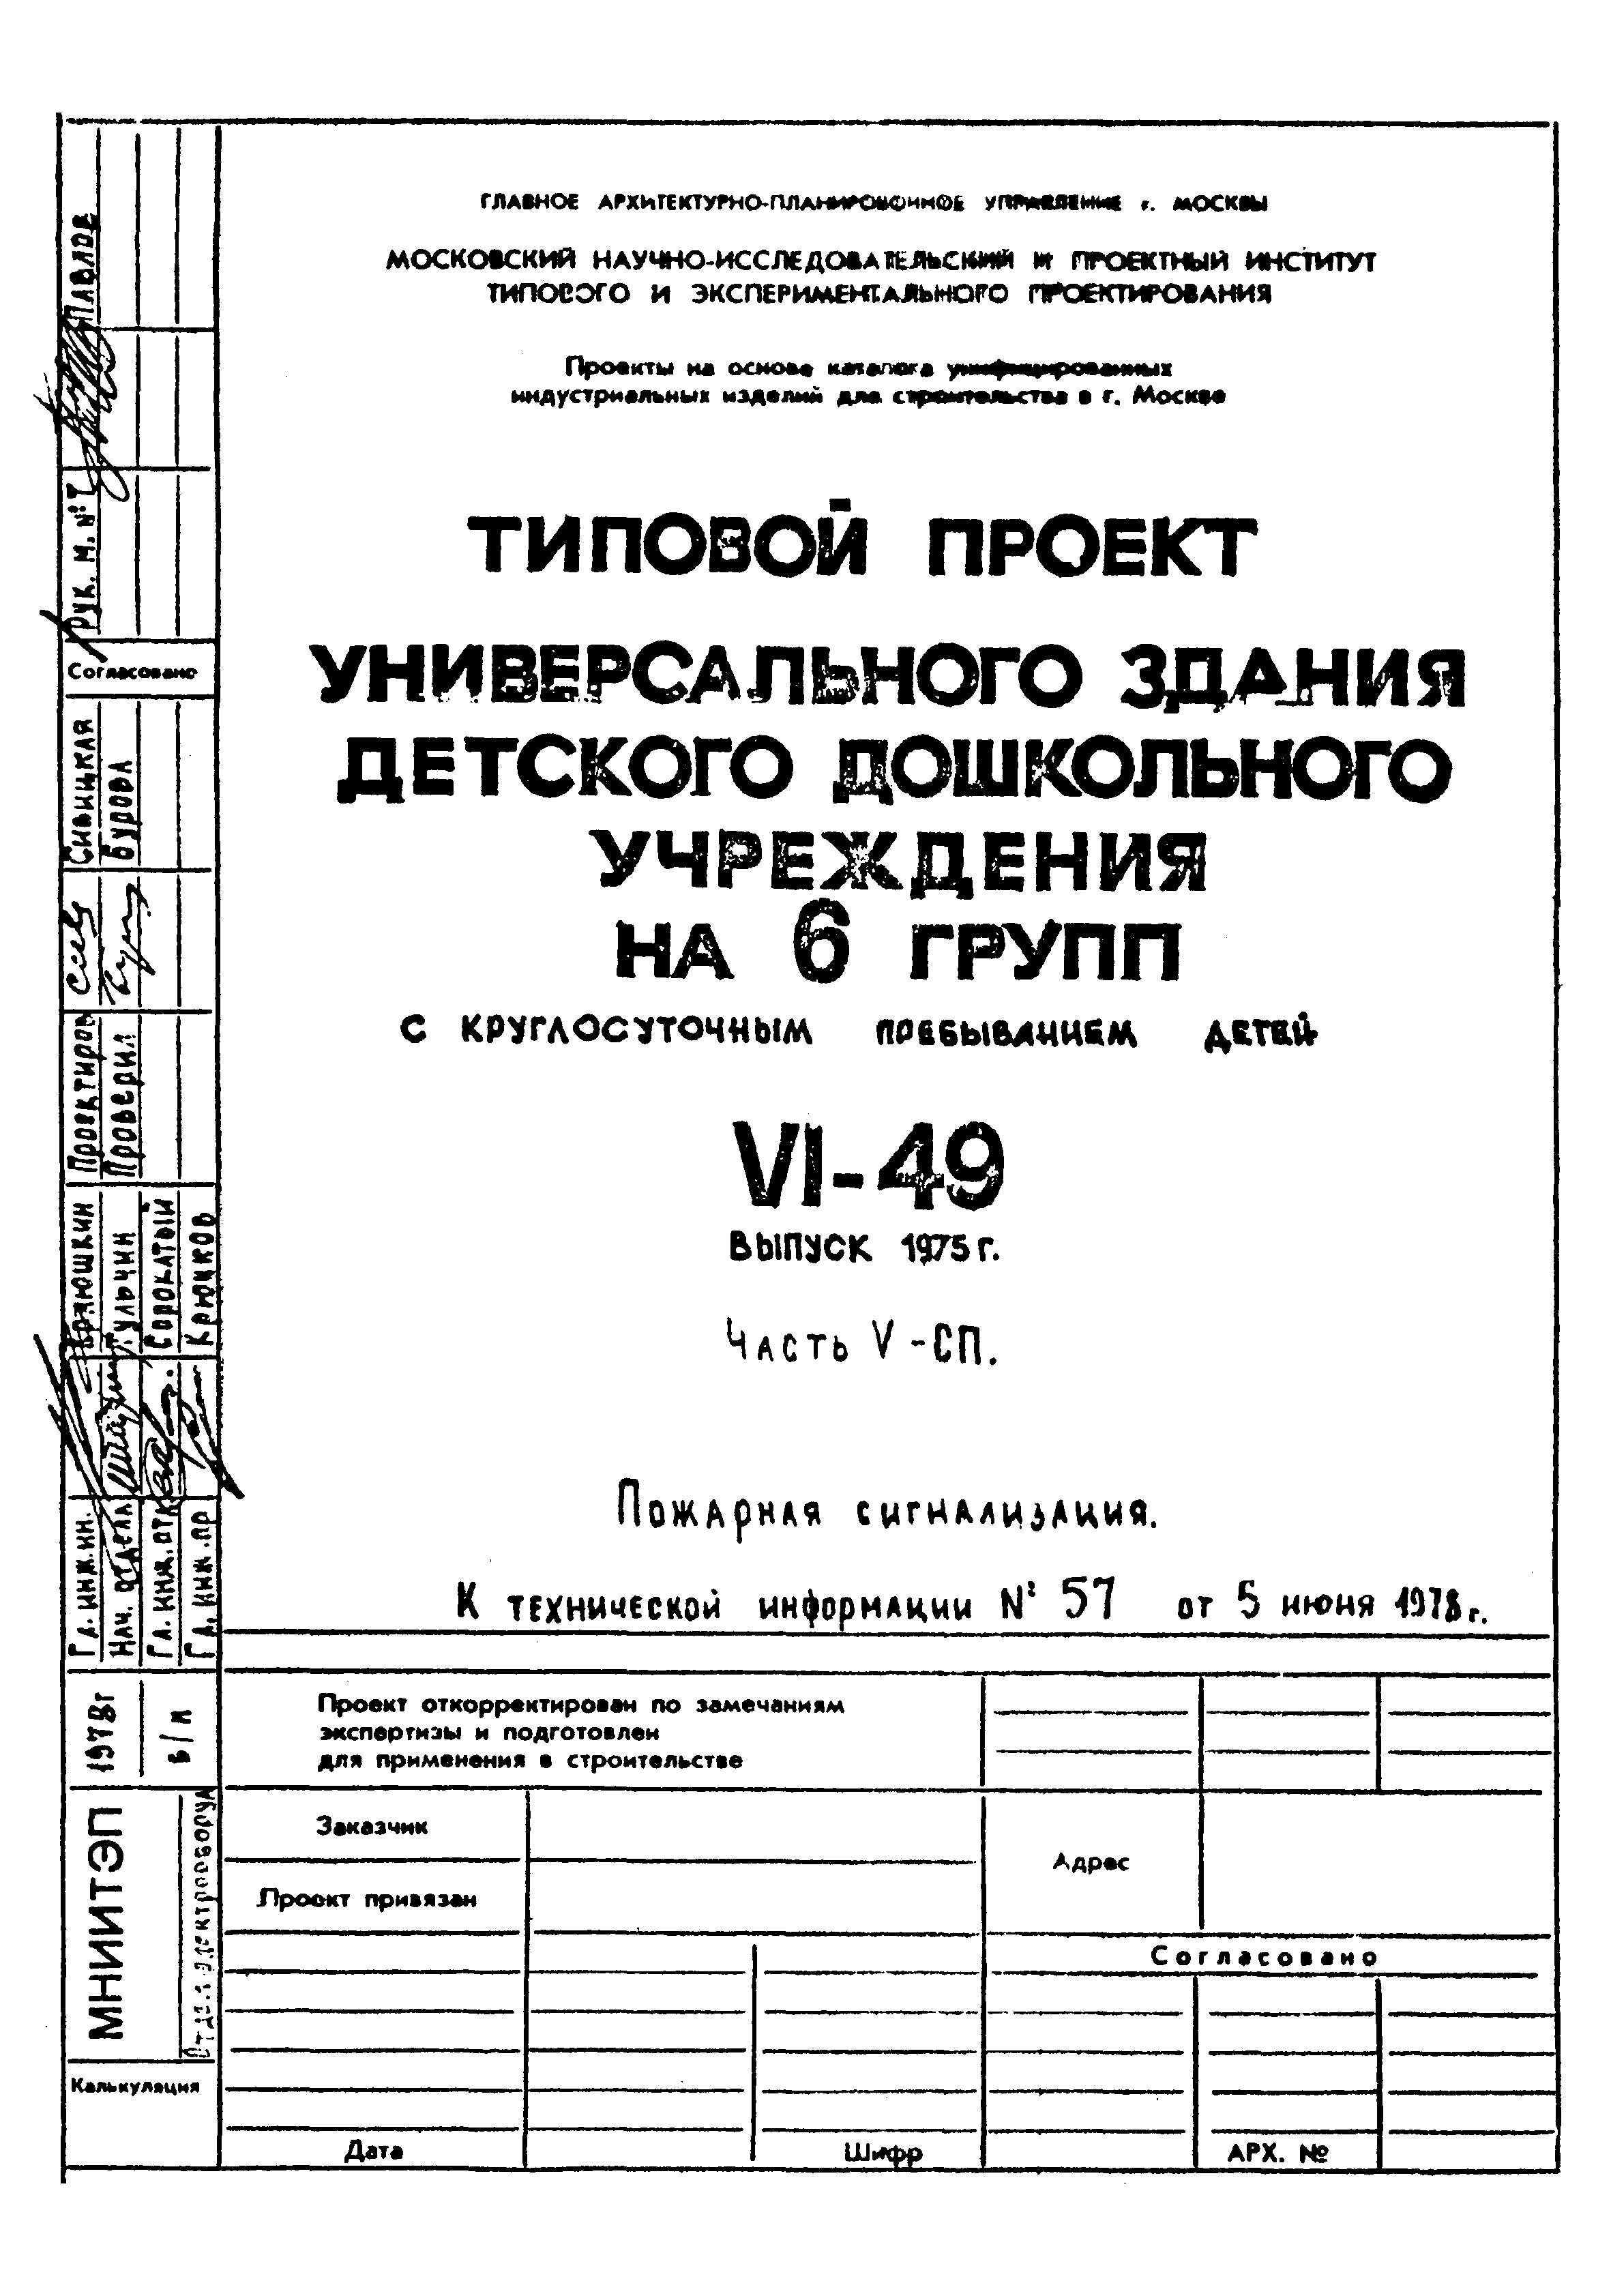 Типовой проект VI-49